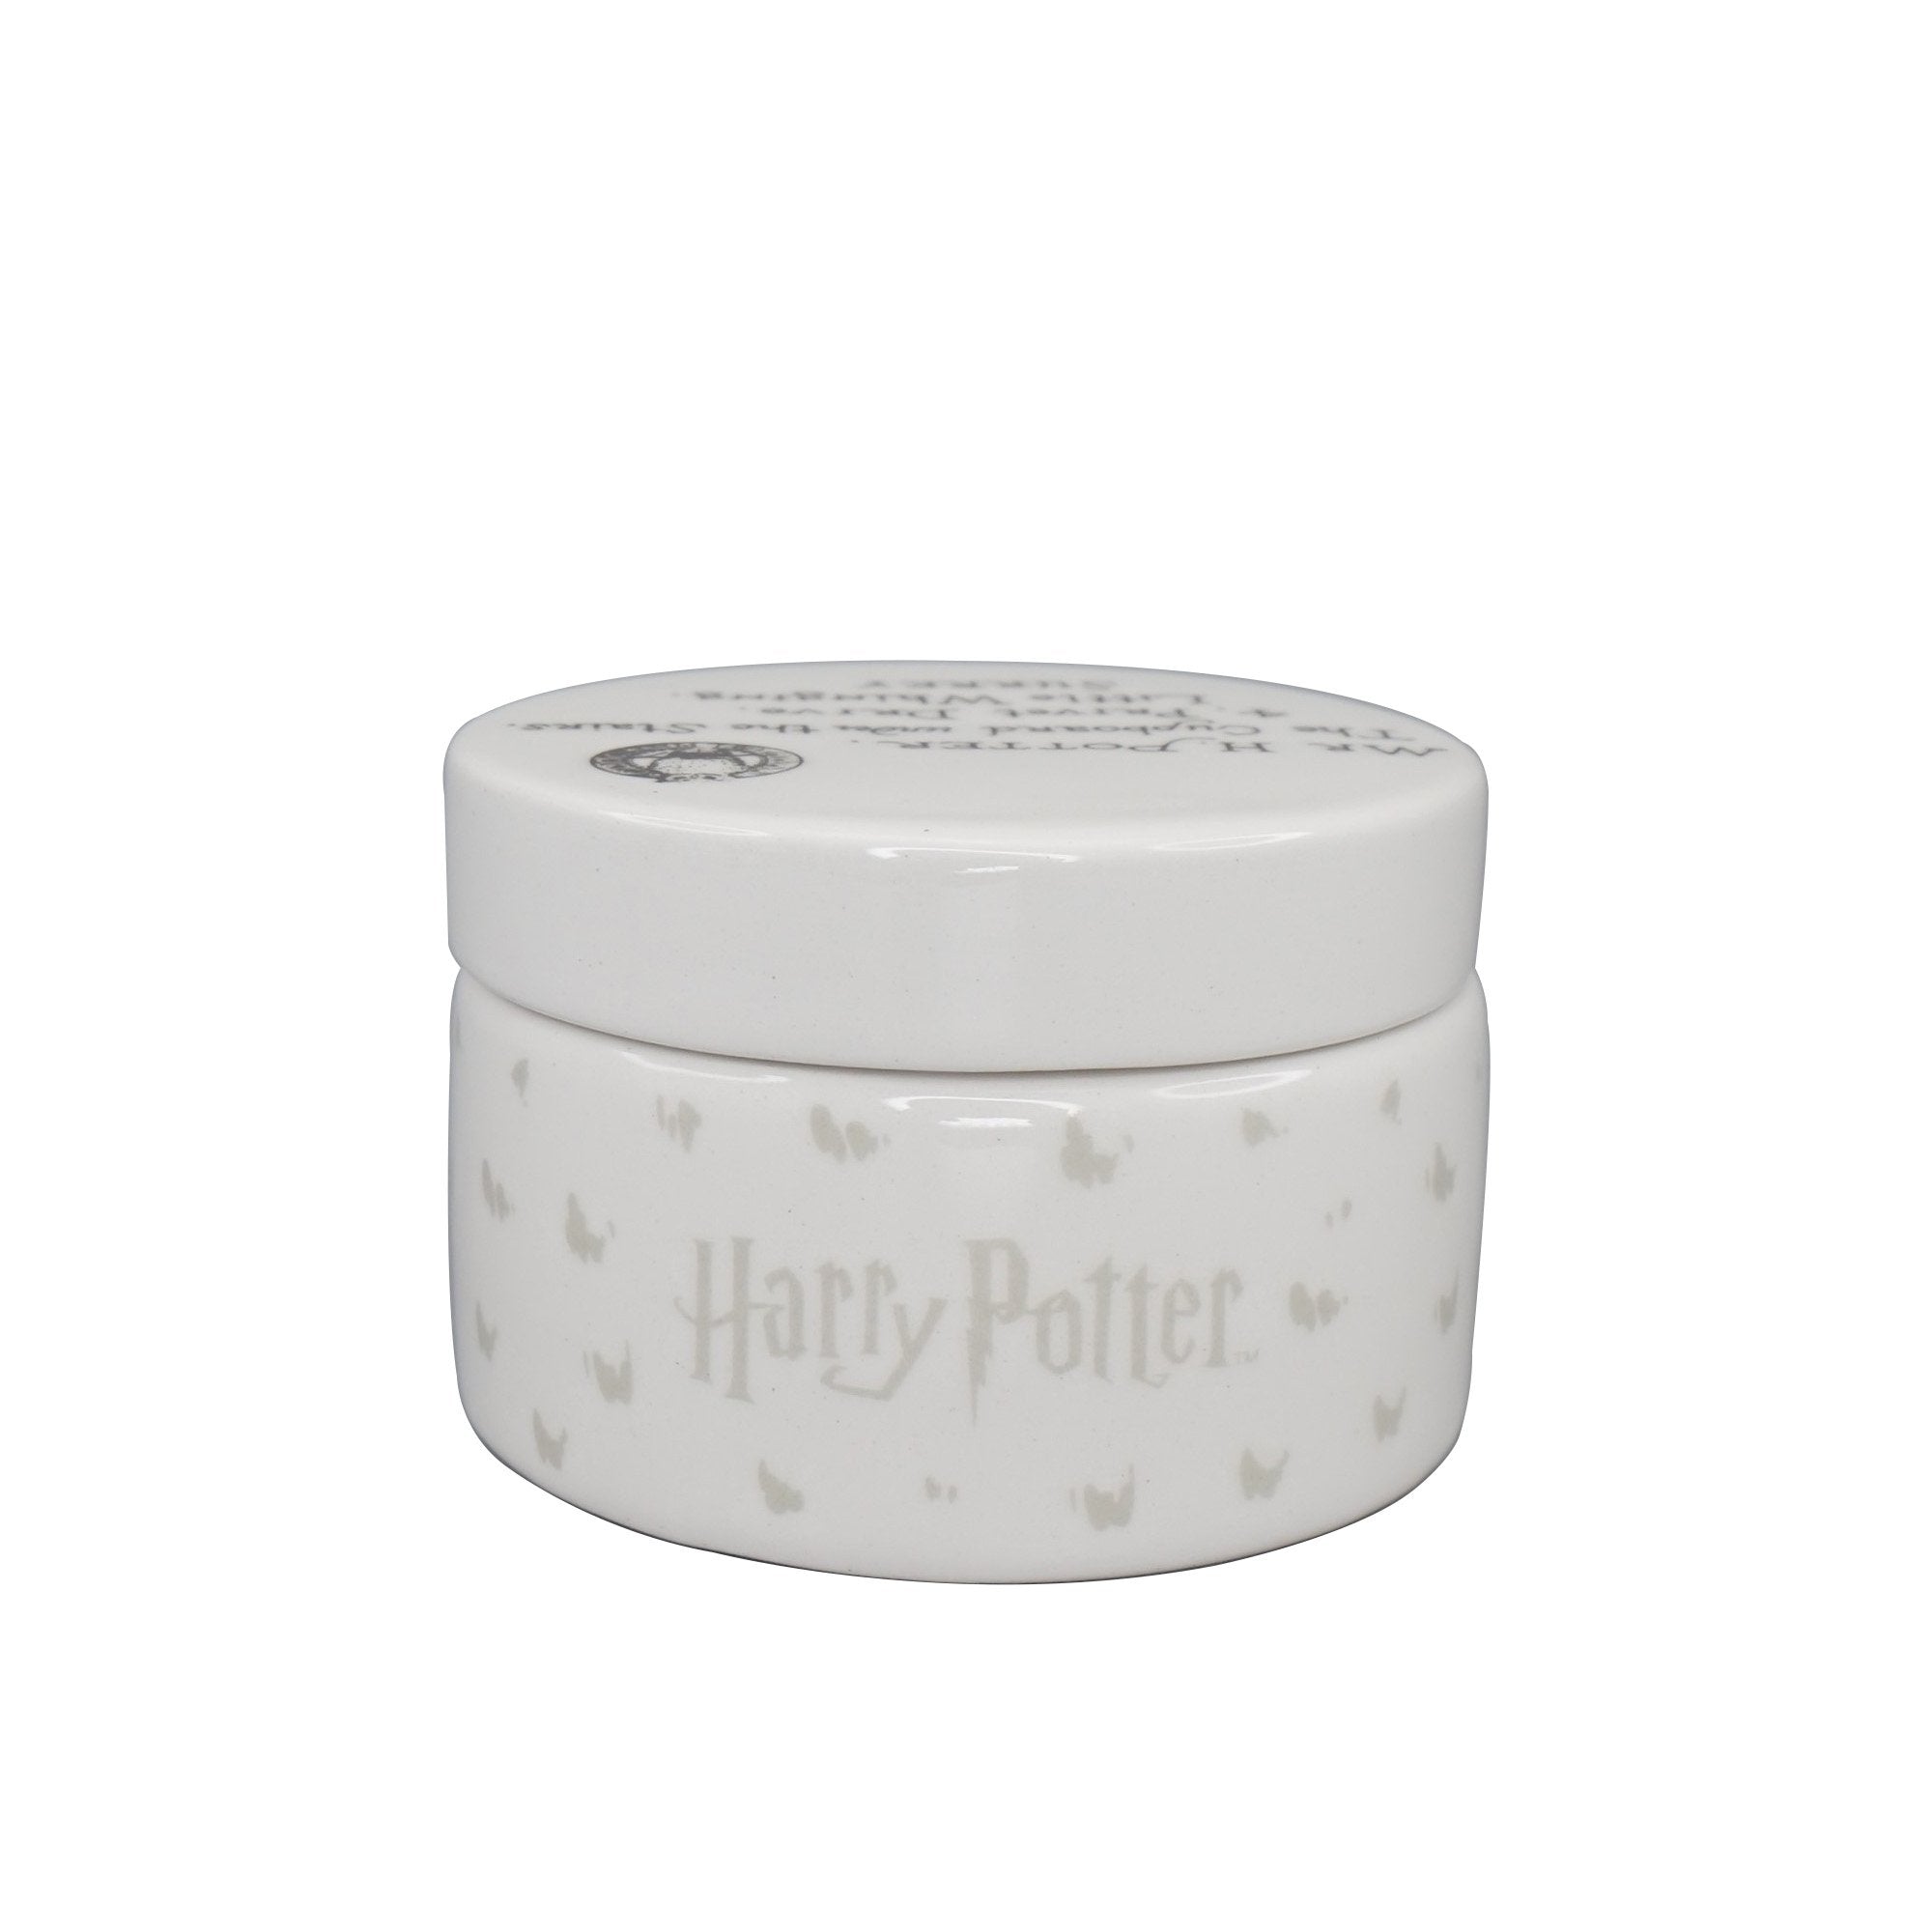 Box Round Ceramic (6cm) - Harry Potter (Hedwig)